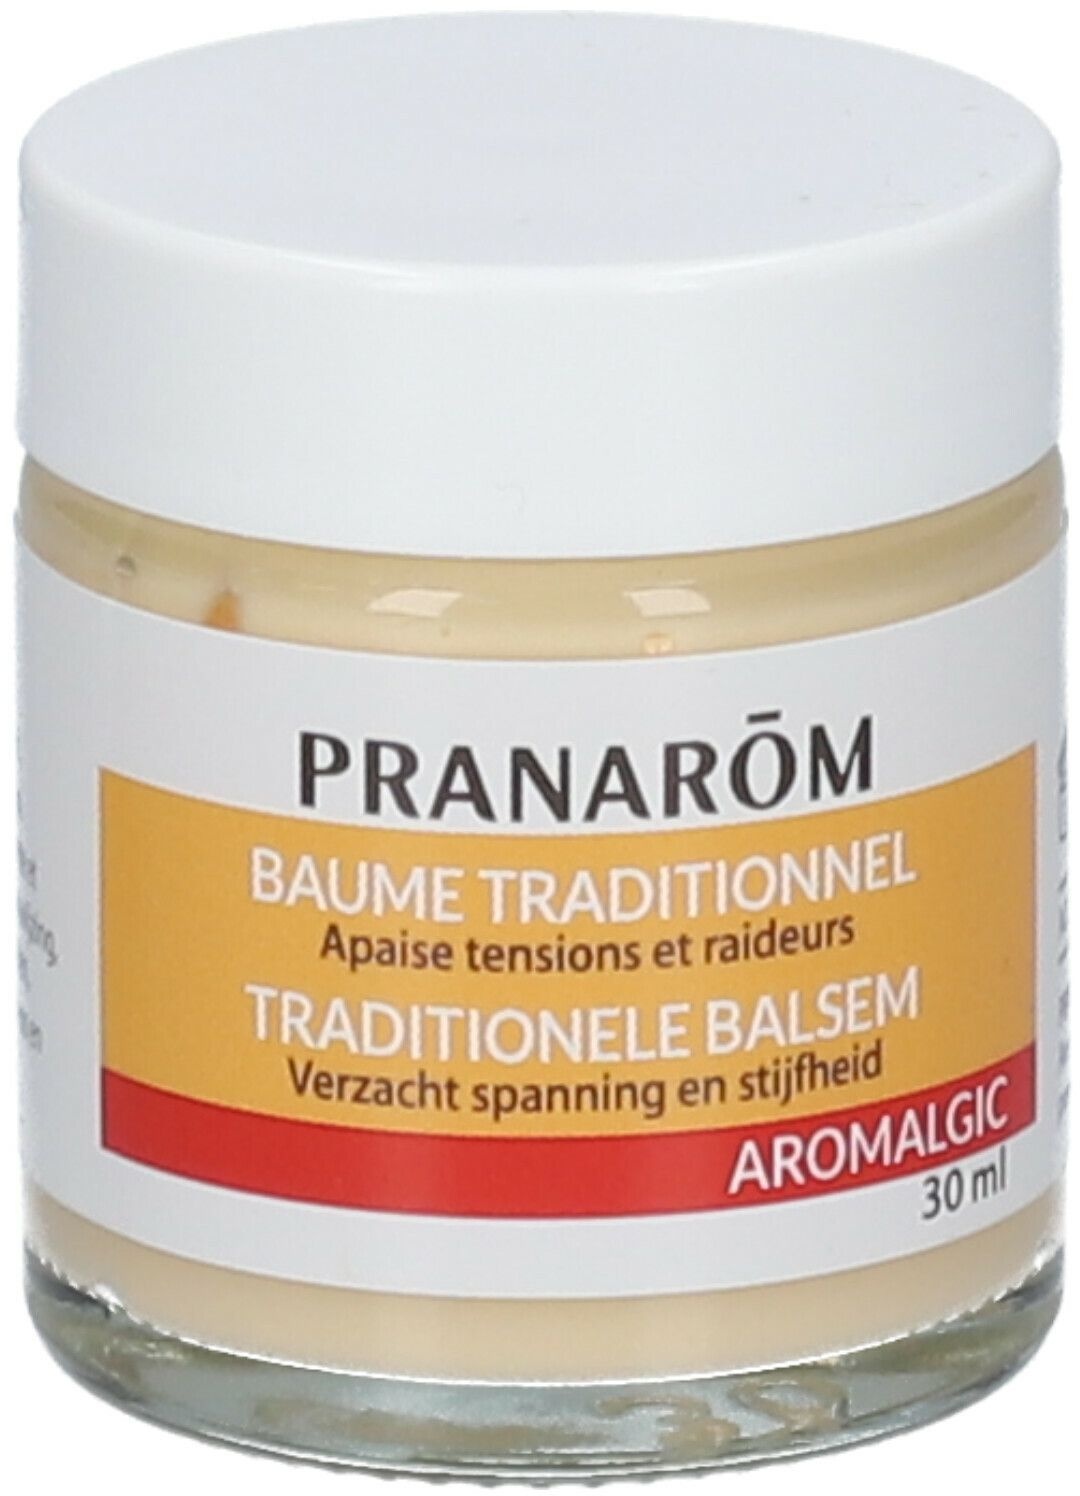 PRANARÔM BAUME TRADITIONNEL 30 ml baume